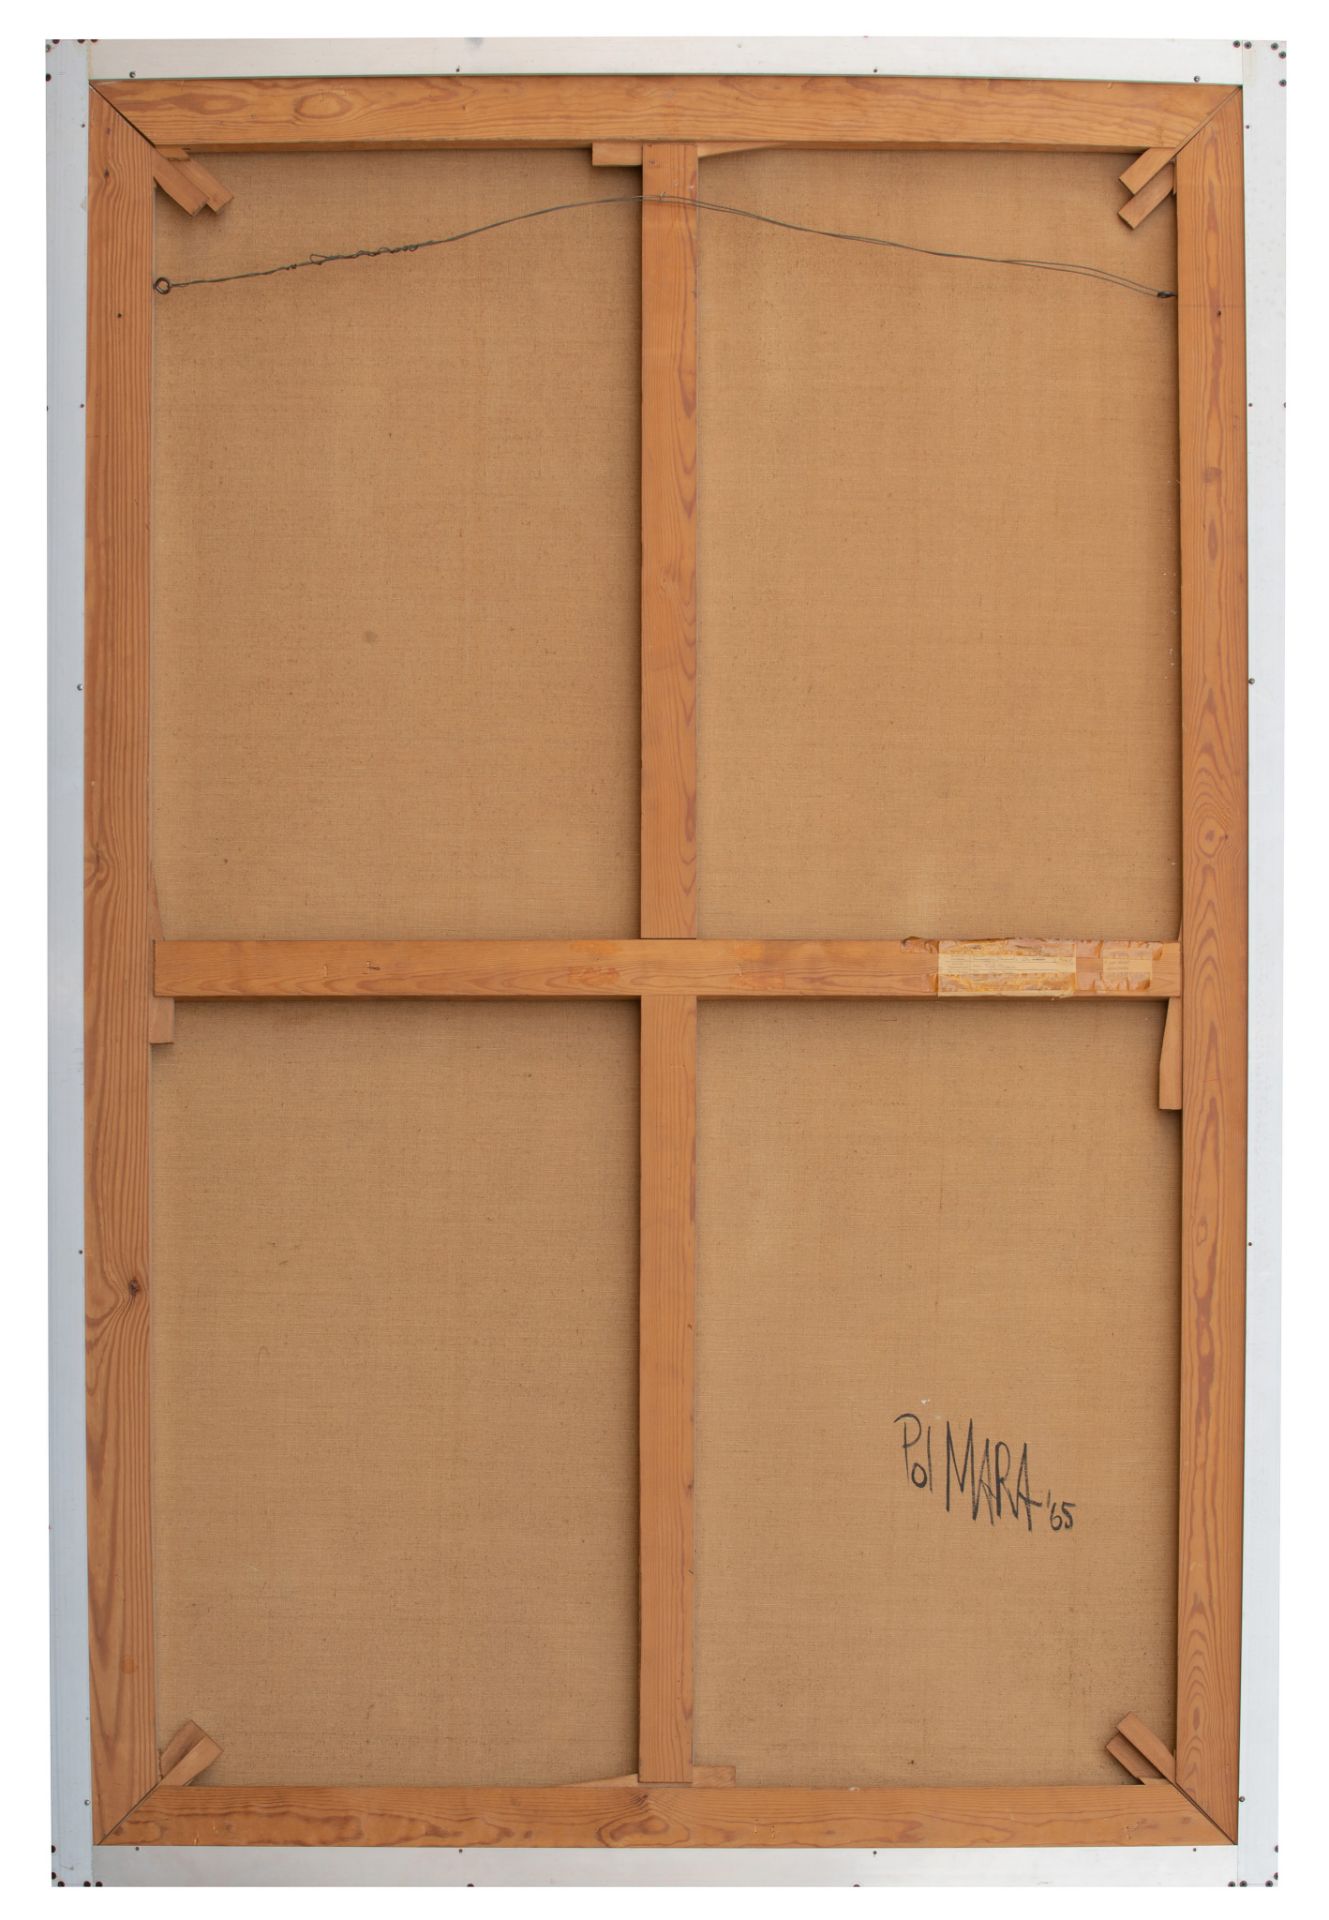 Pol Mara (1920-1998), 'New Shoe', 1965, crayon and oil on canvas, 130 x 195 cm - Bild 3 aus 4